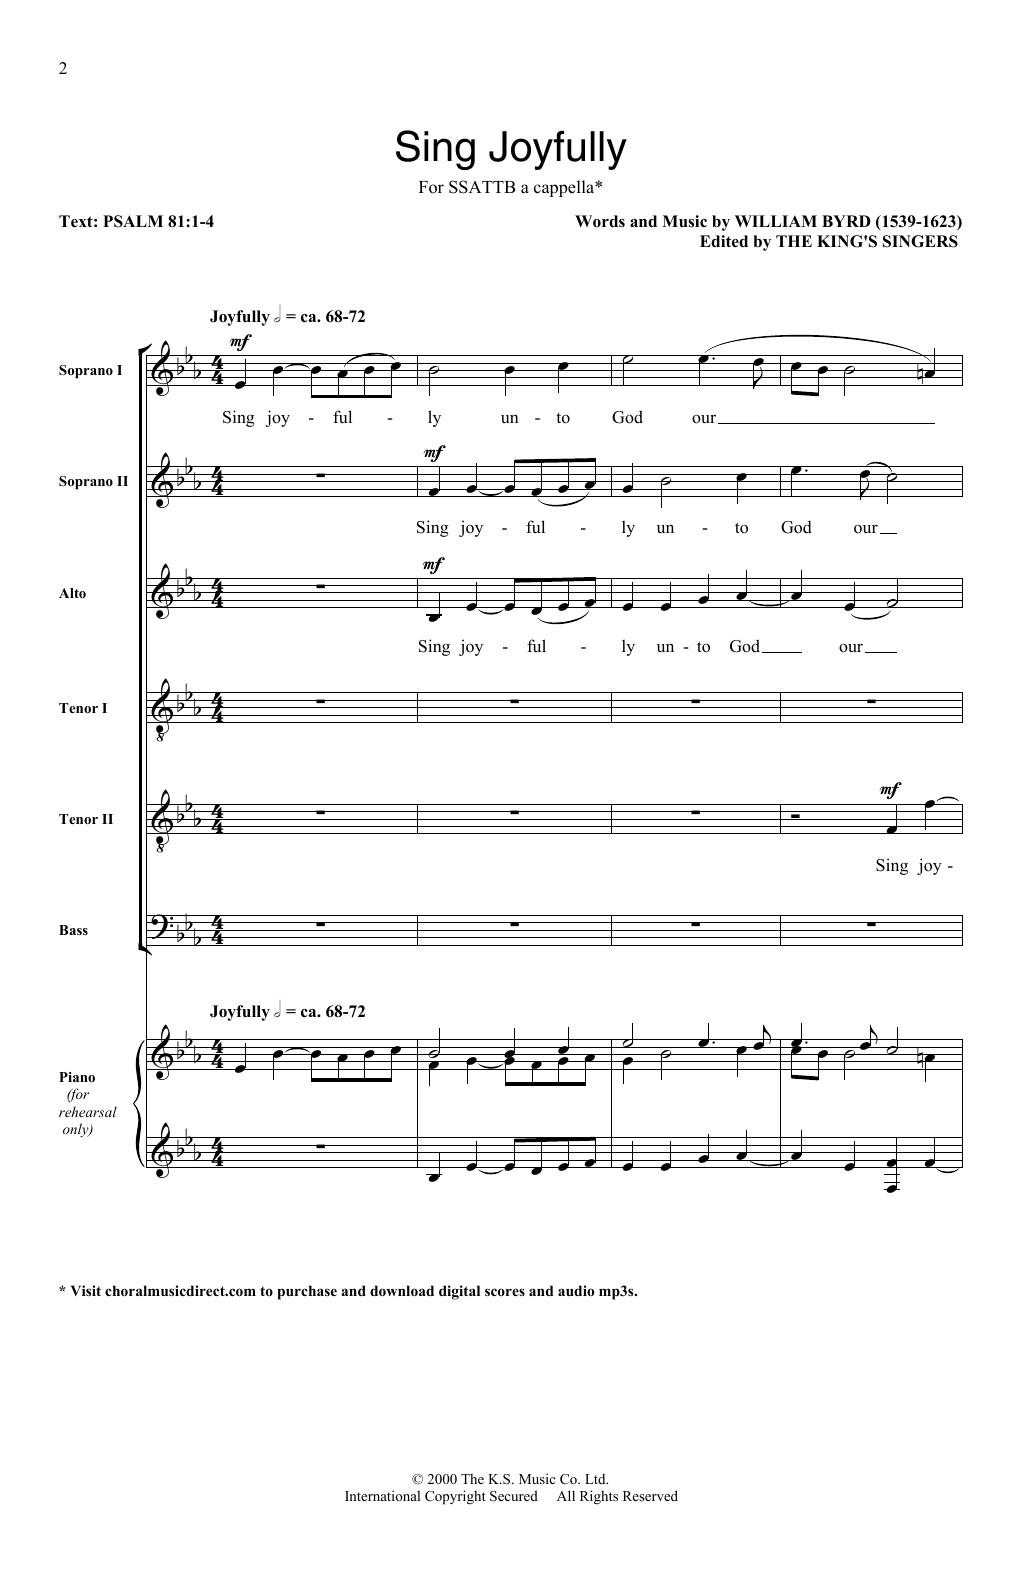 William Byrd Sing Joyfully Sheet Music Notes & Chords for SATB - Download or Print PDF